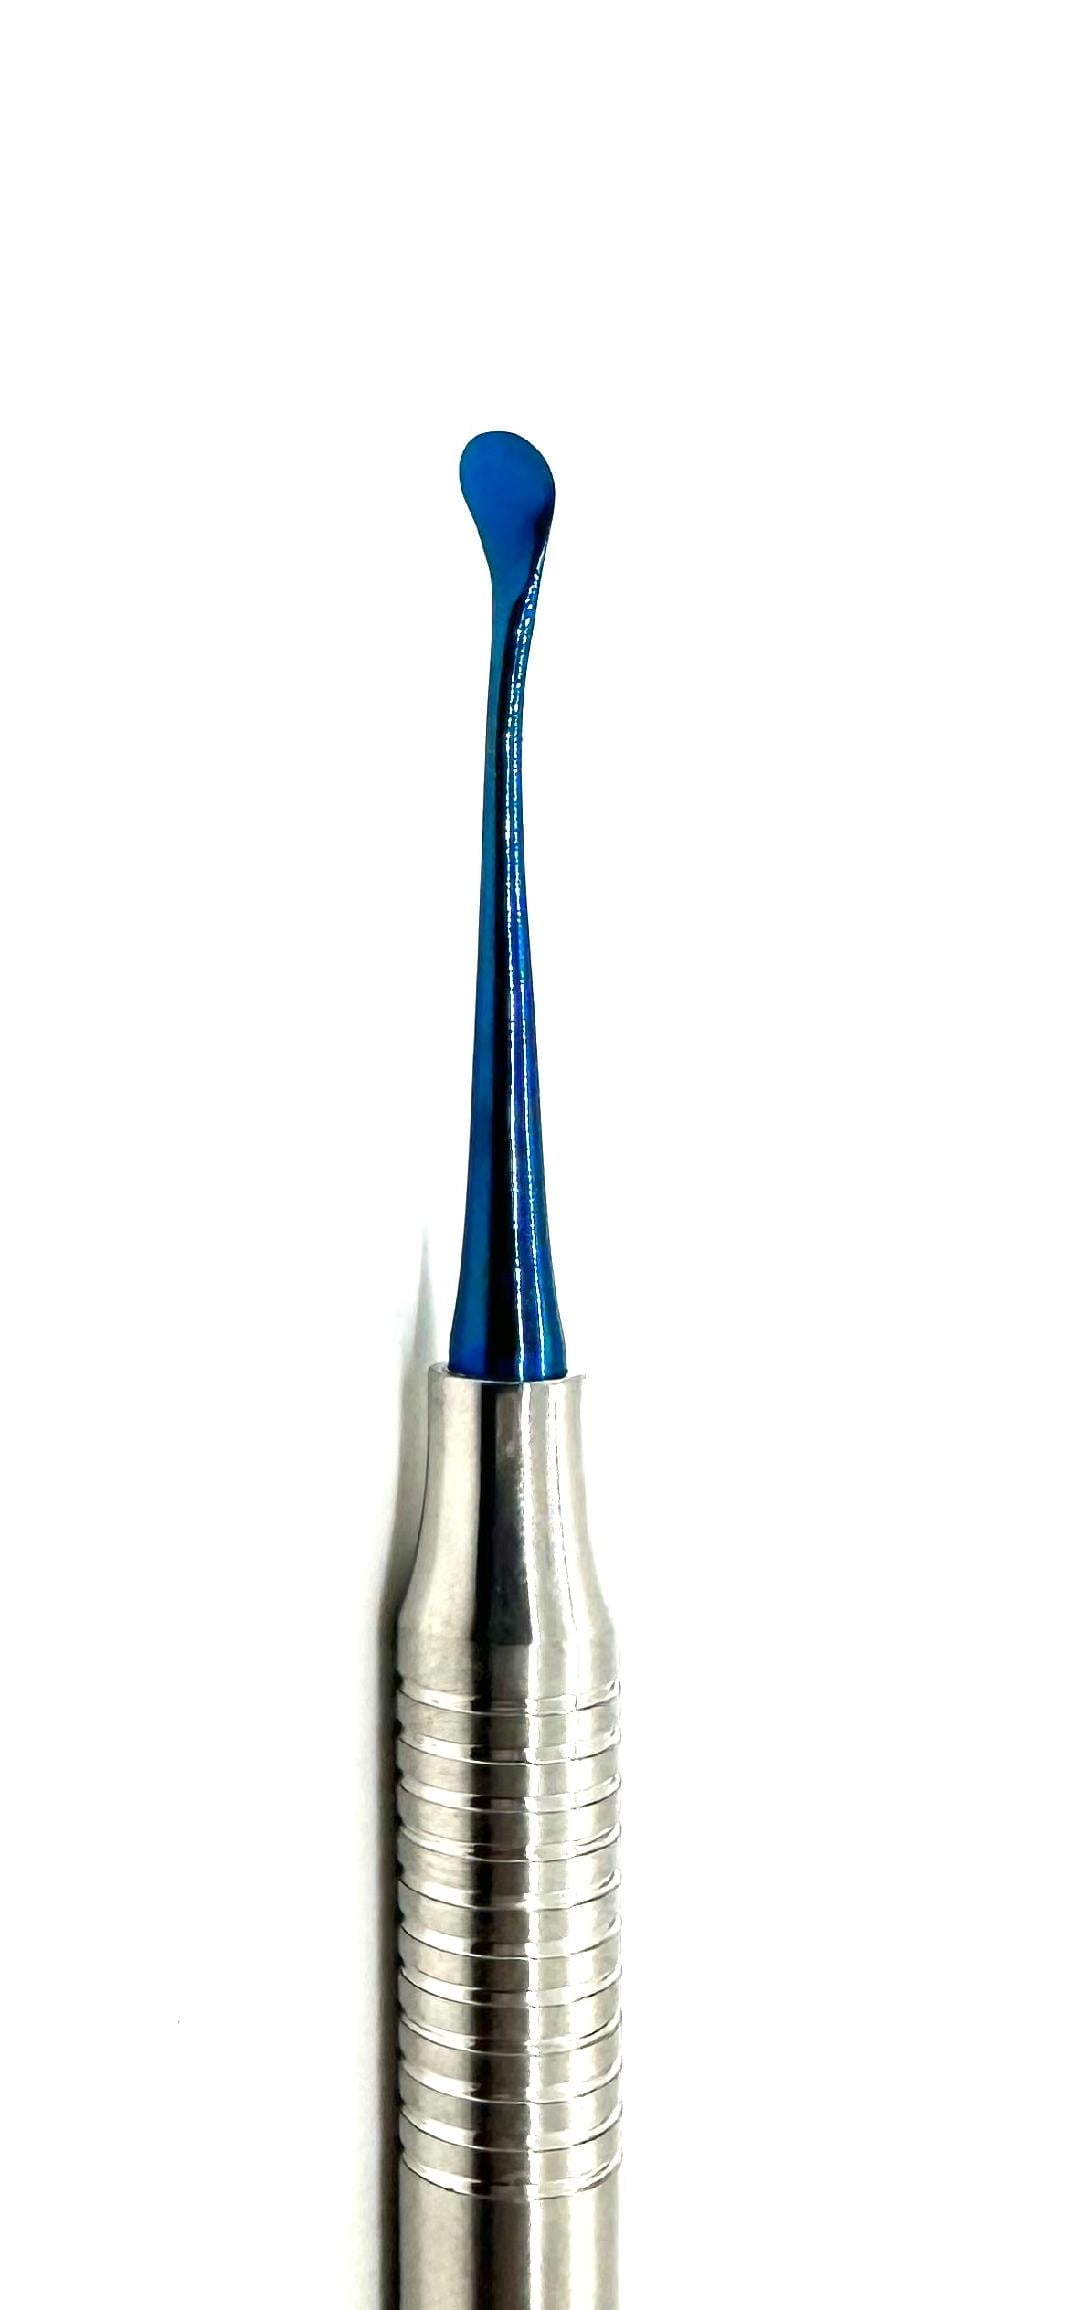 Porte cure-dents Ø4,2x3,3cm inox - RETIF